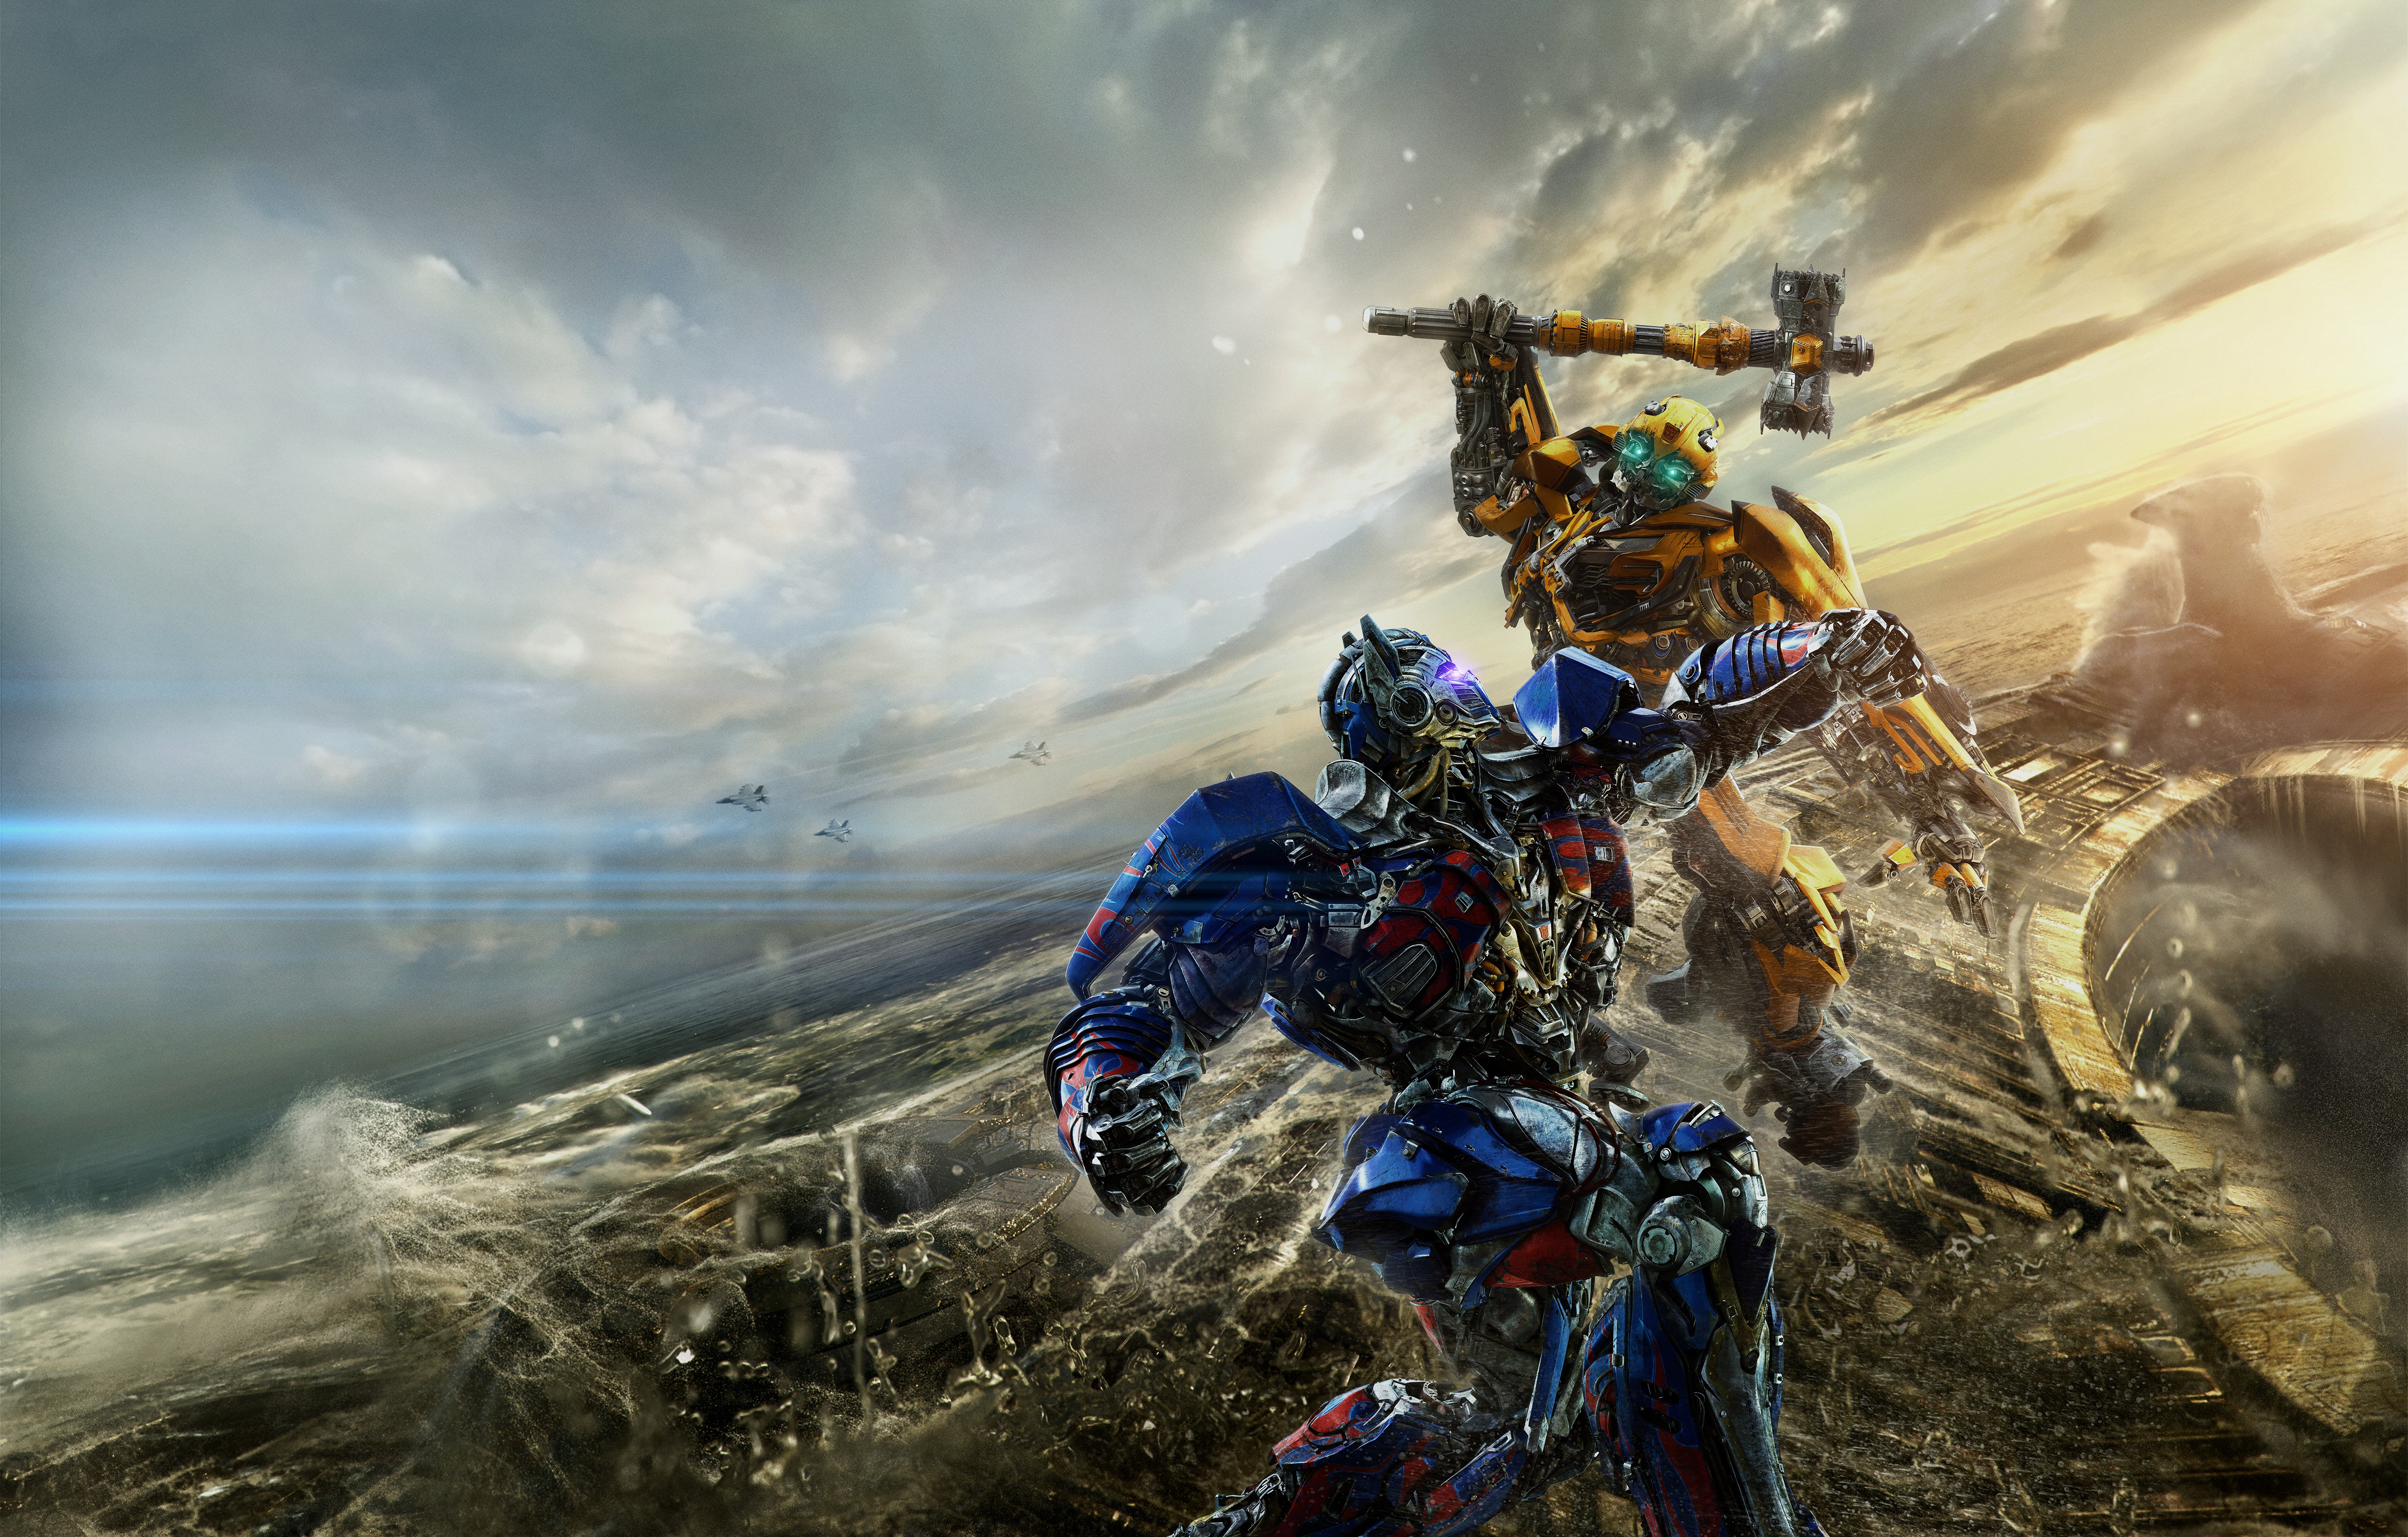 transformers, bumblebee (transformers), transformers: the last knight, optimus prime, movie